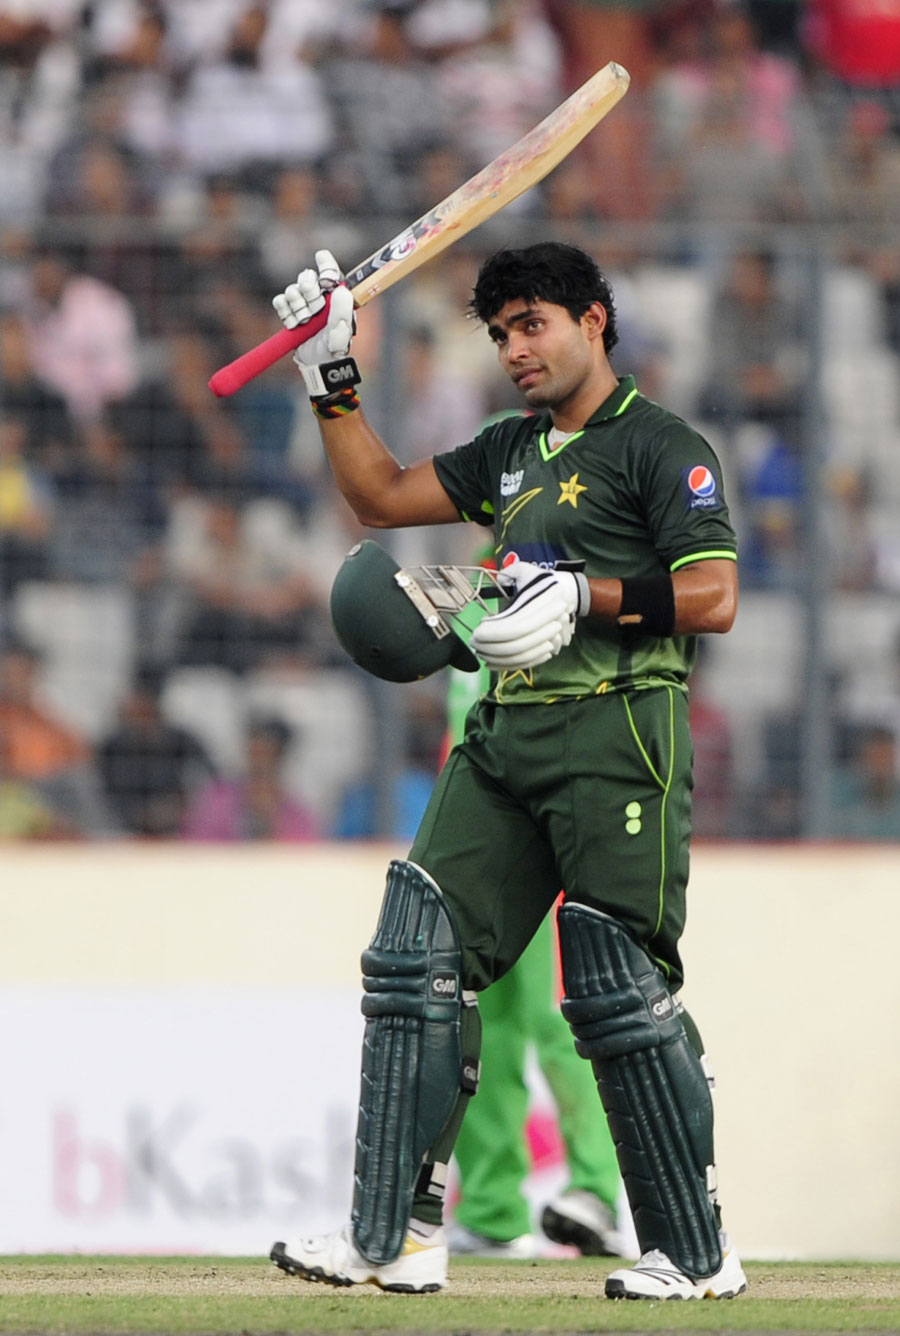 Pakistan sets a difficult target of 263 runs